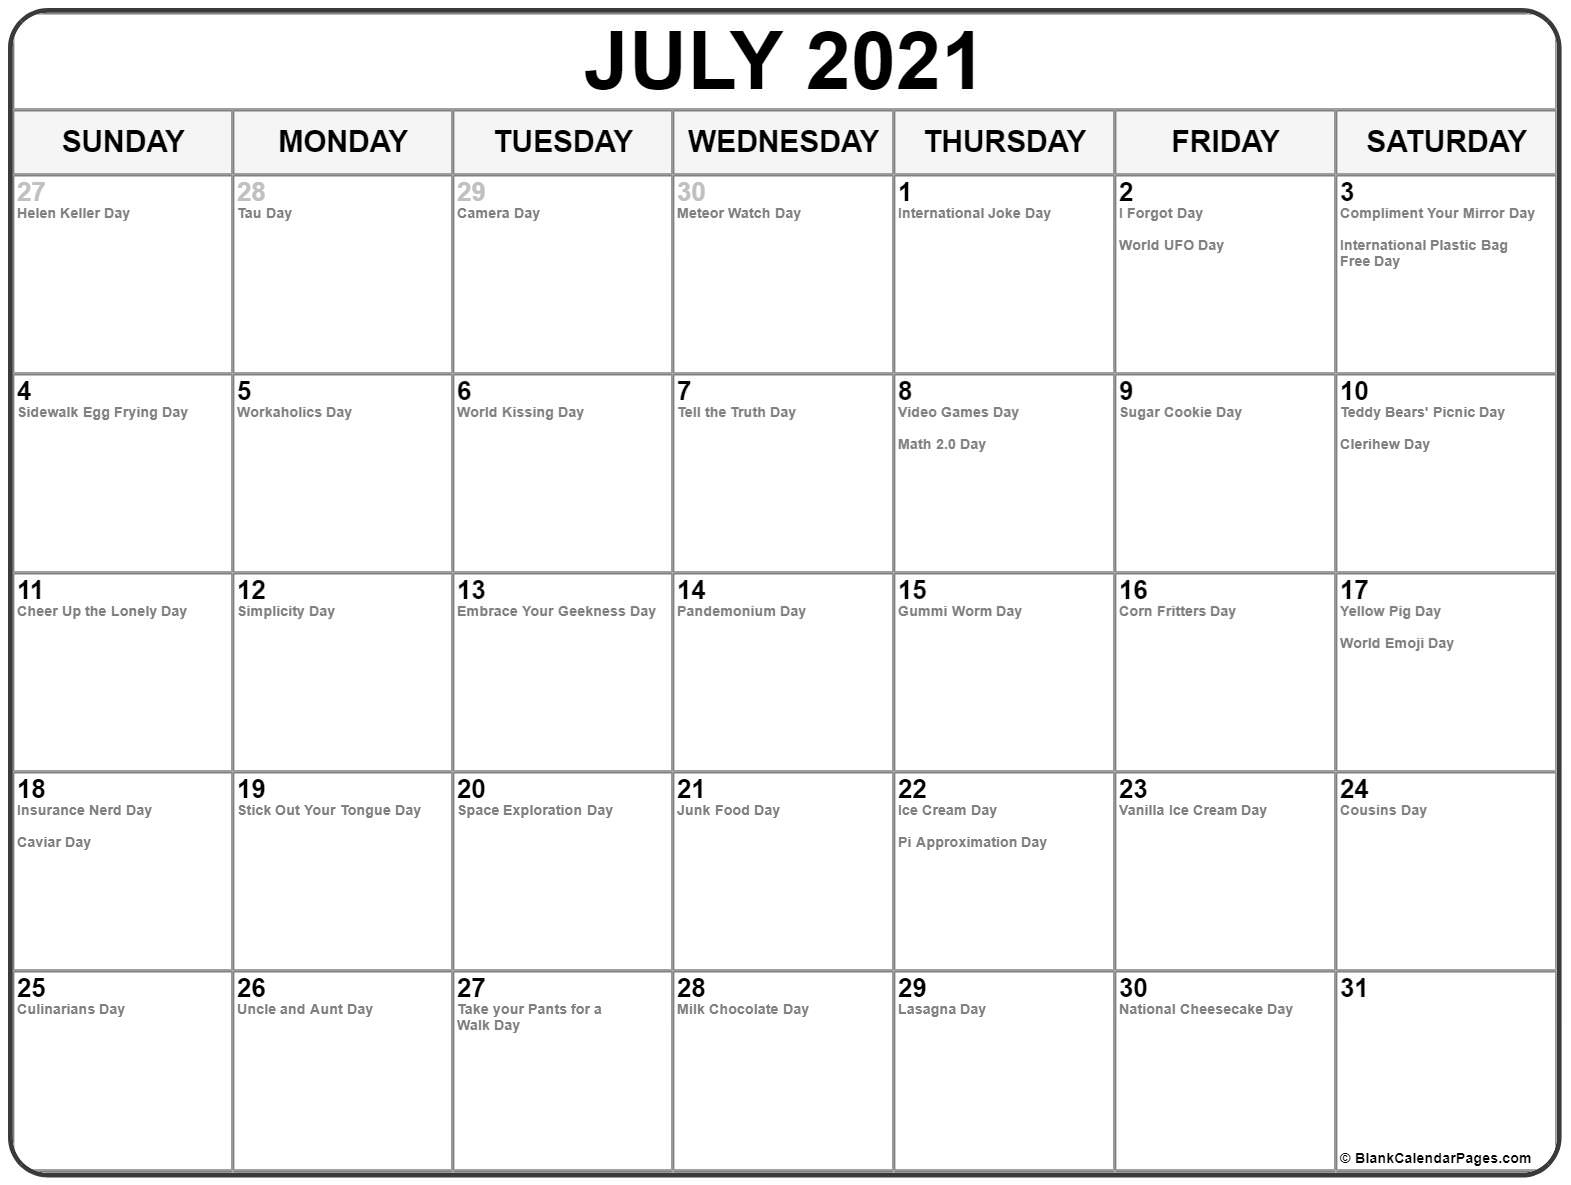 July 2021 Calendar With Holidays - Calendar Template 2021 July 2021 Calendar Holidays